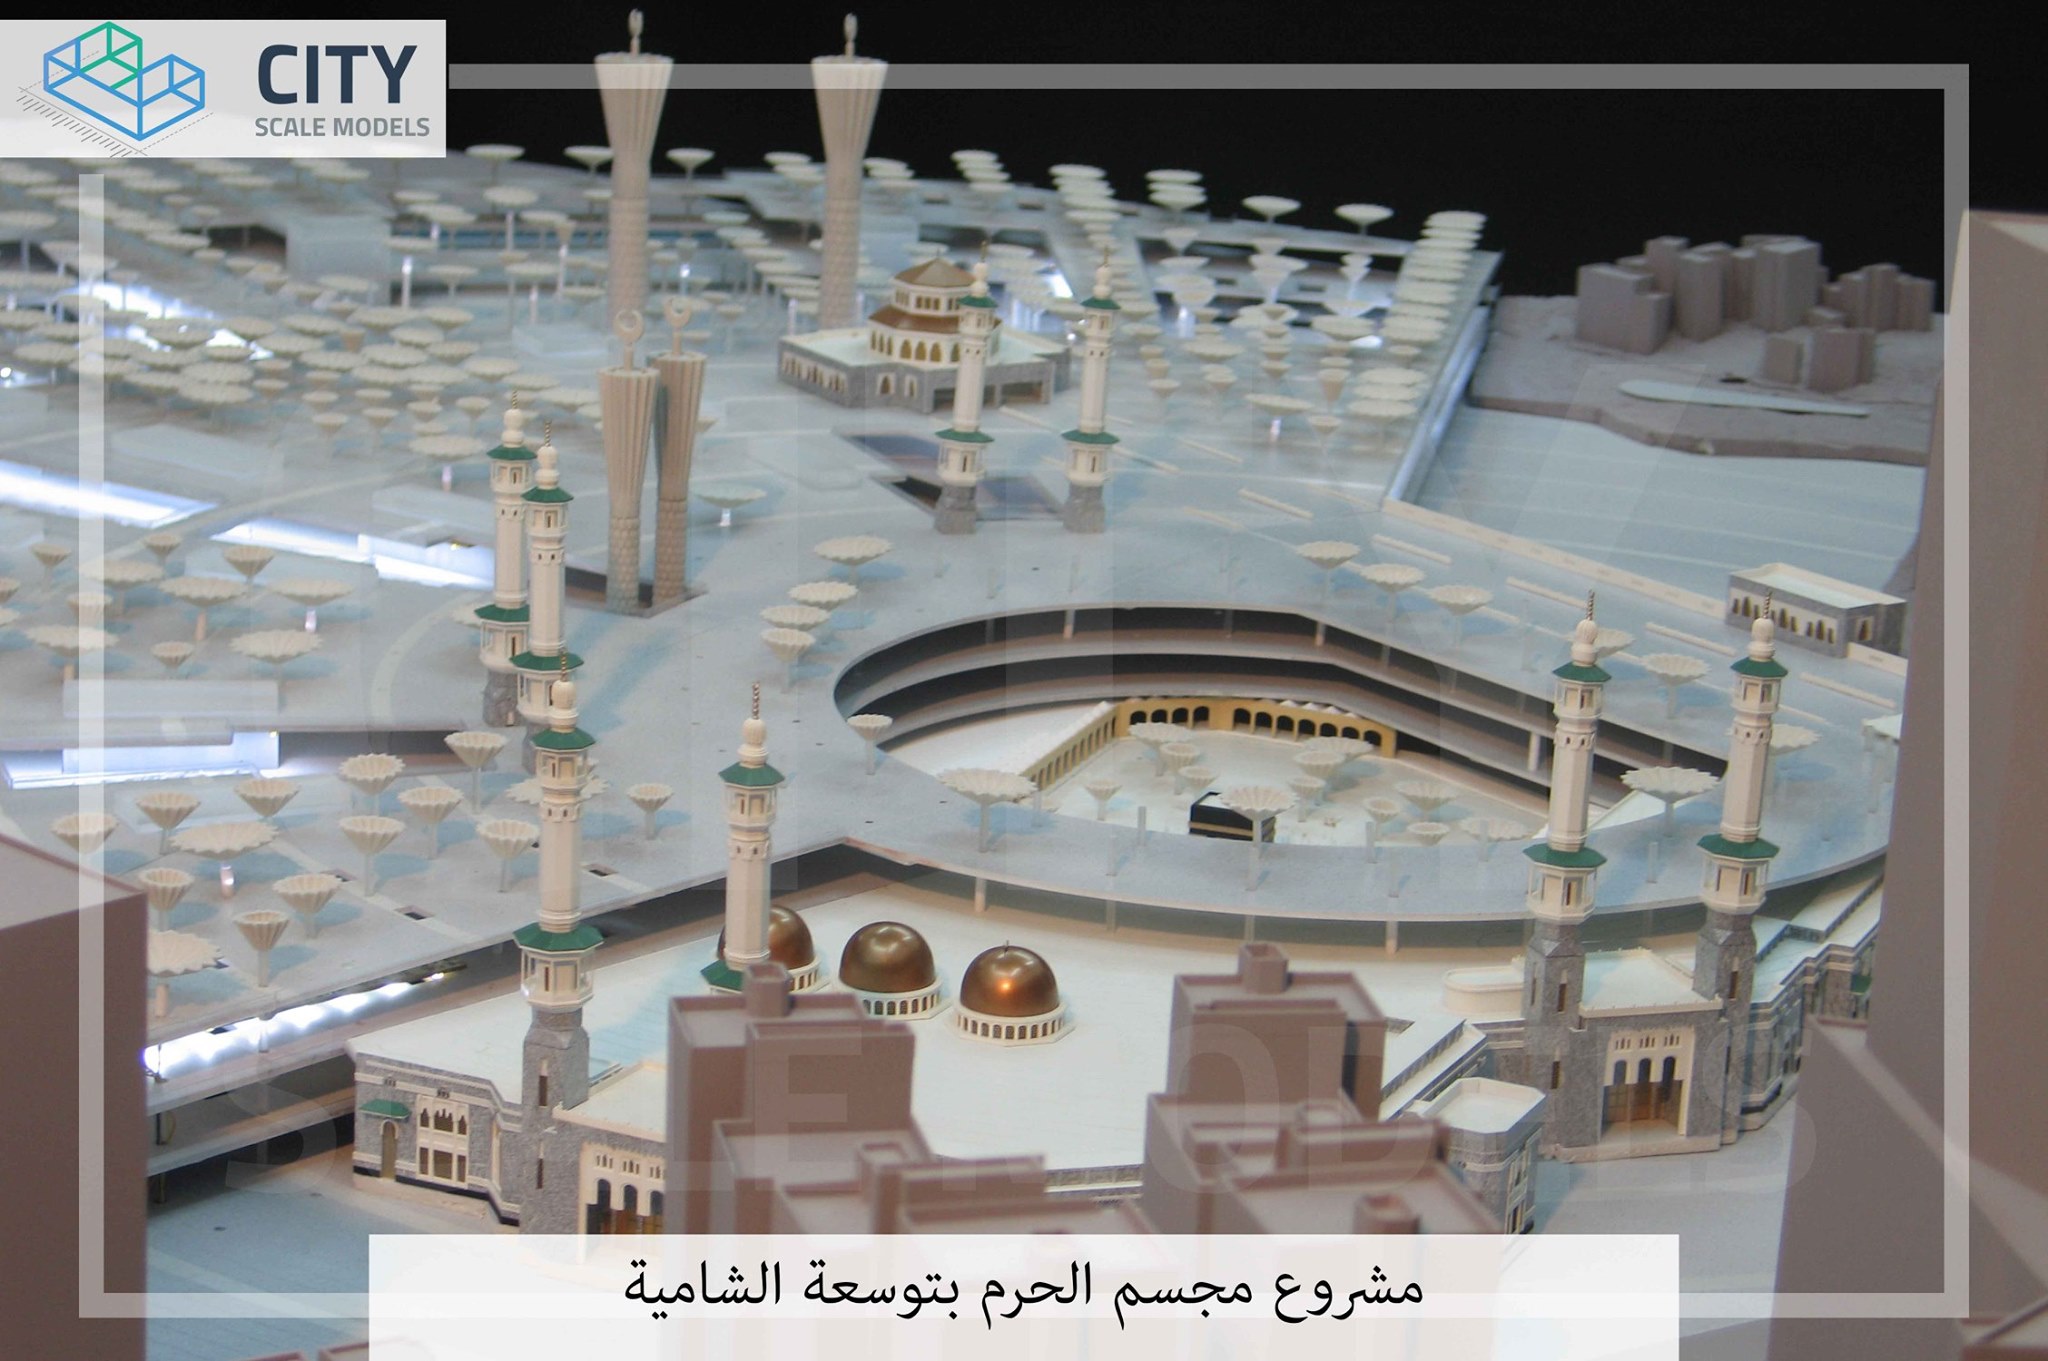 Al-Shamiyah Haram Extension in Makkah Scale Model